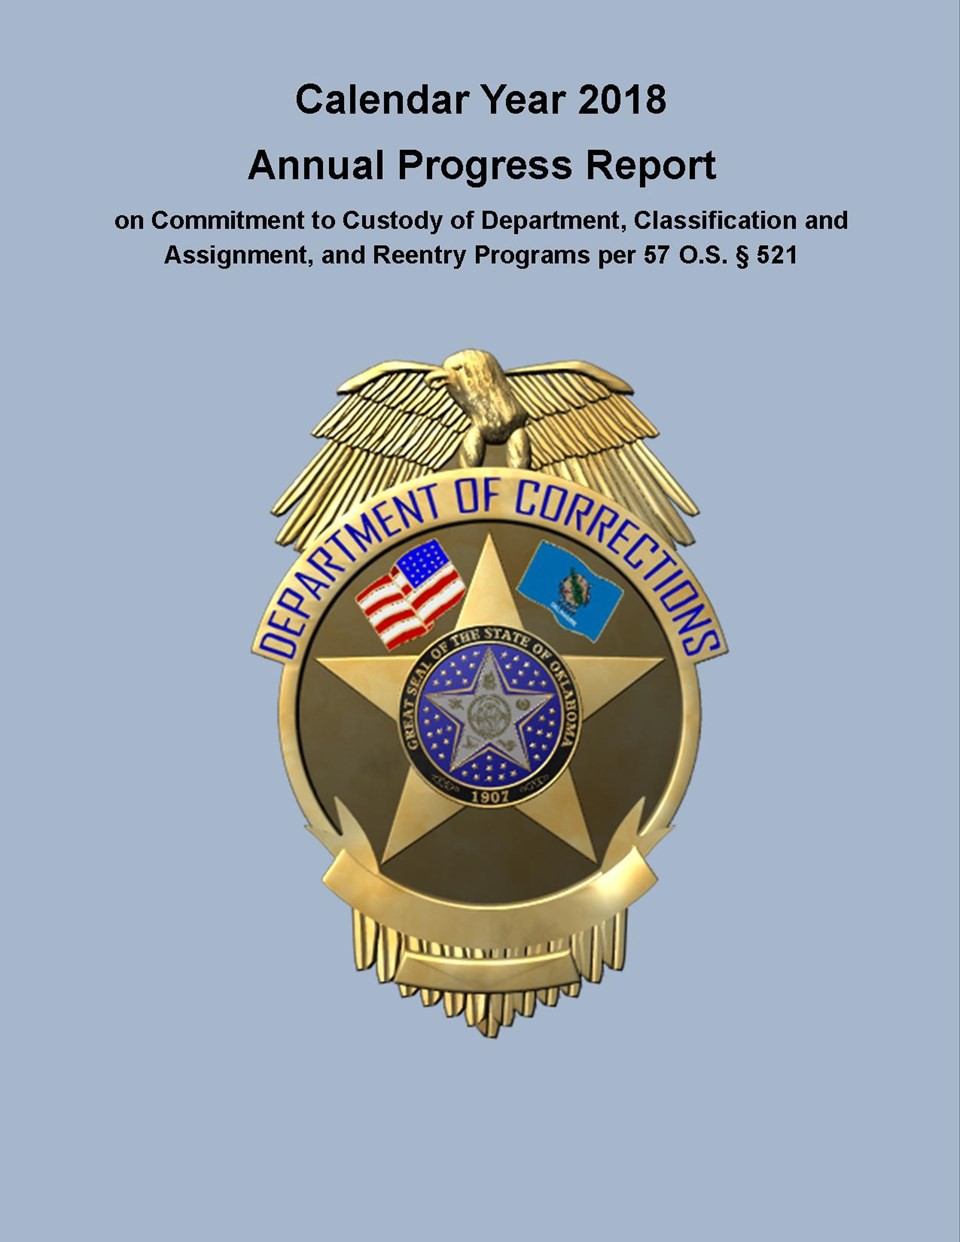 Calendar Year 2018 Annual Progress Report